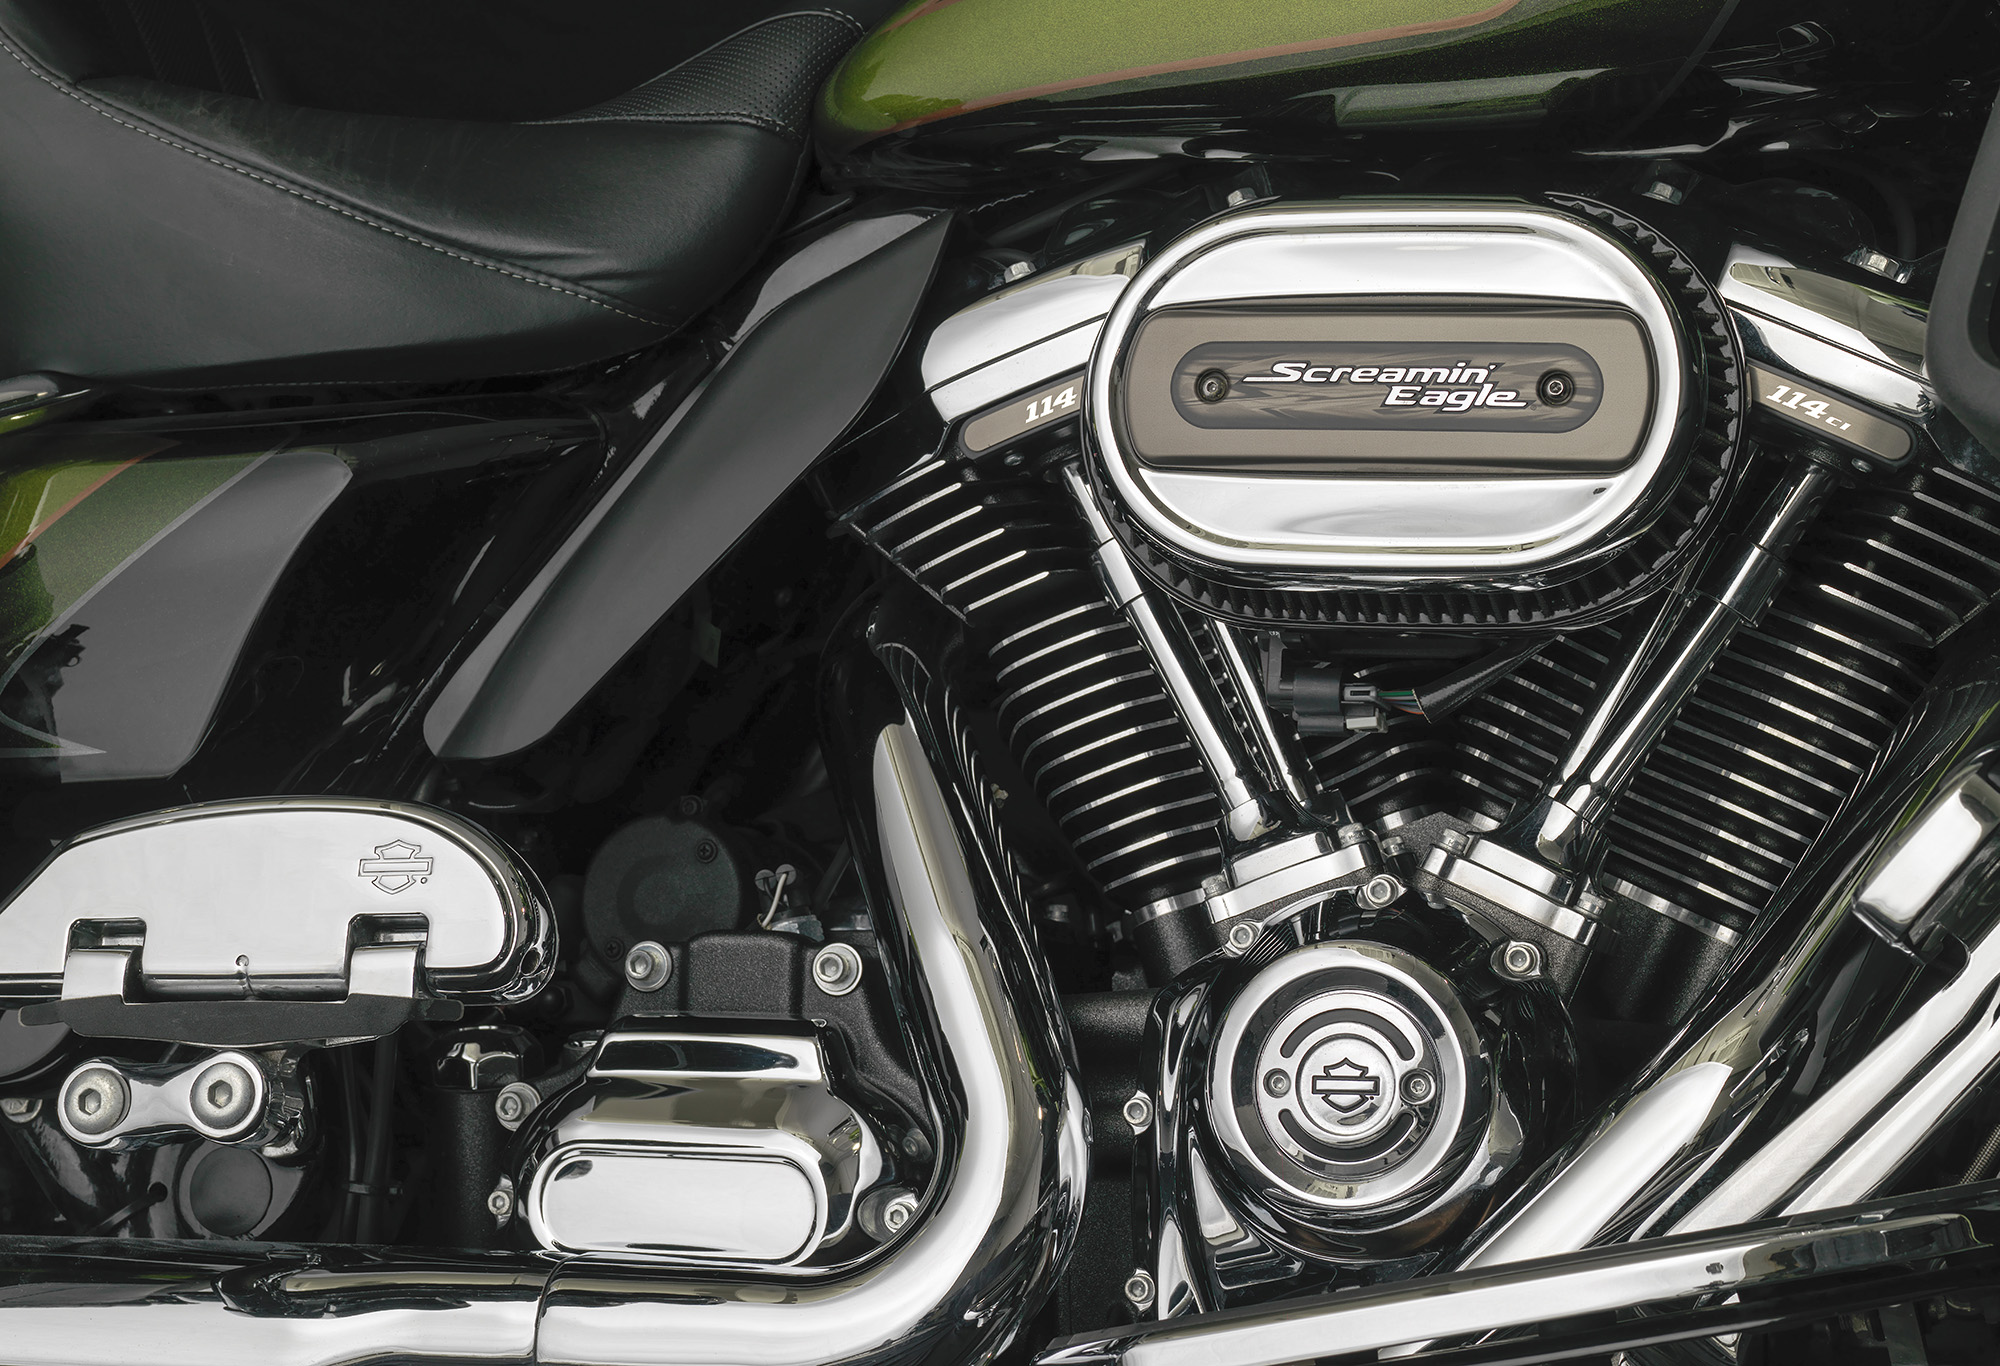 Harley Davidson CVO Motor